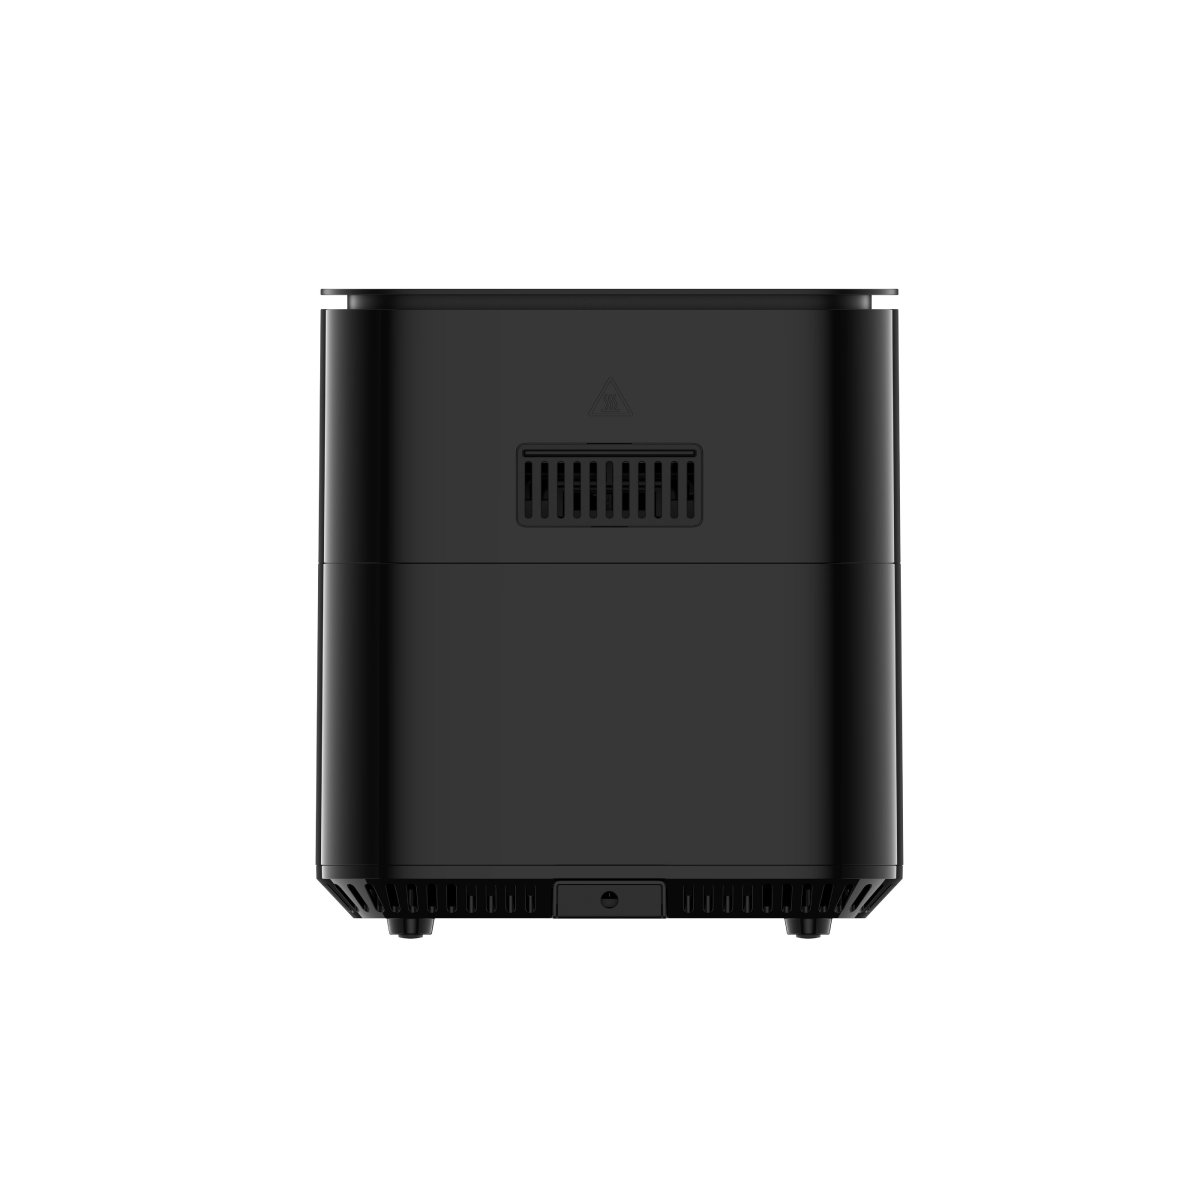 Xiaomi Smart Air Fryer 6.5L (Black), , large image number 4